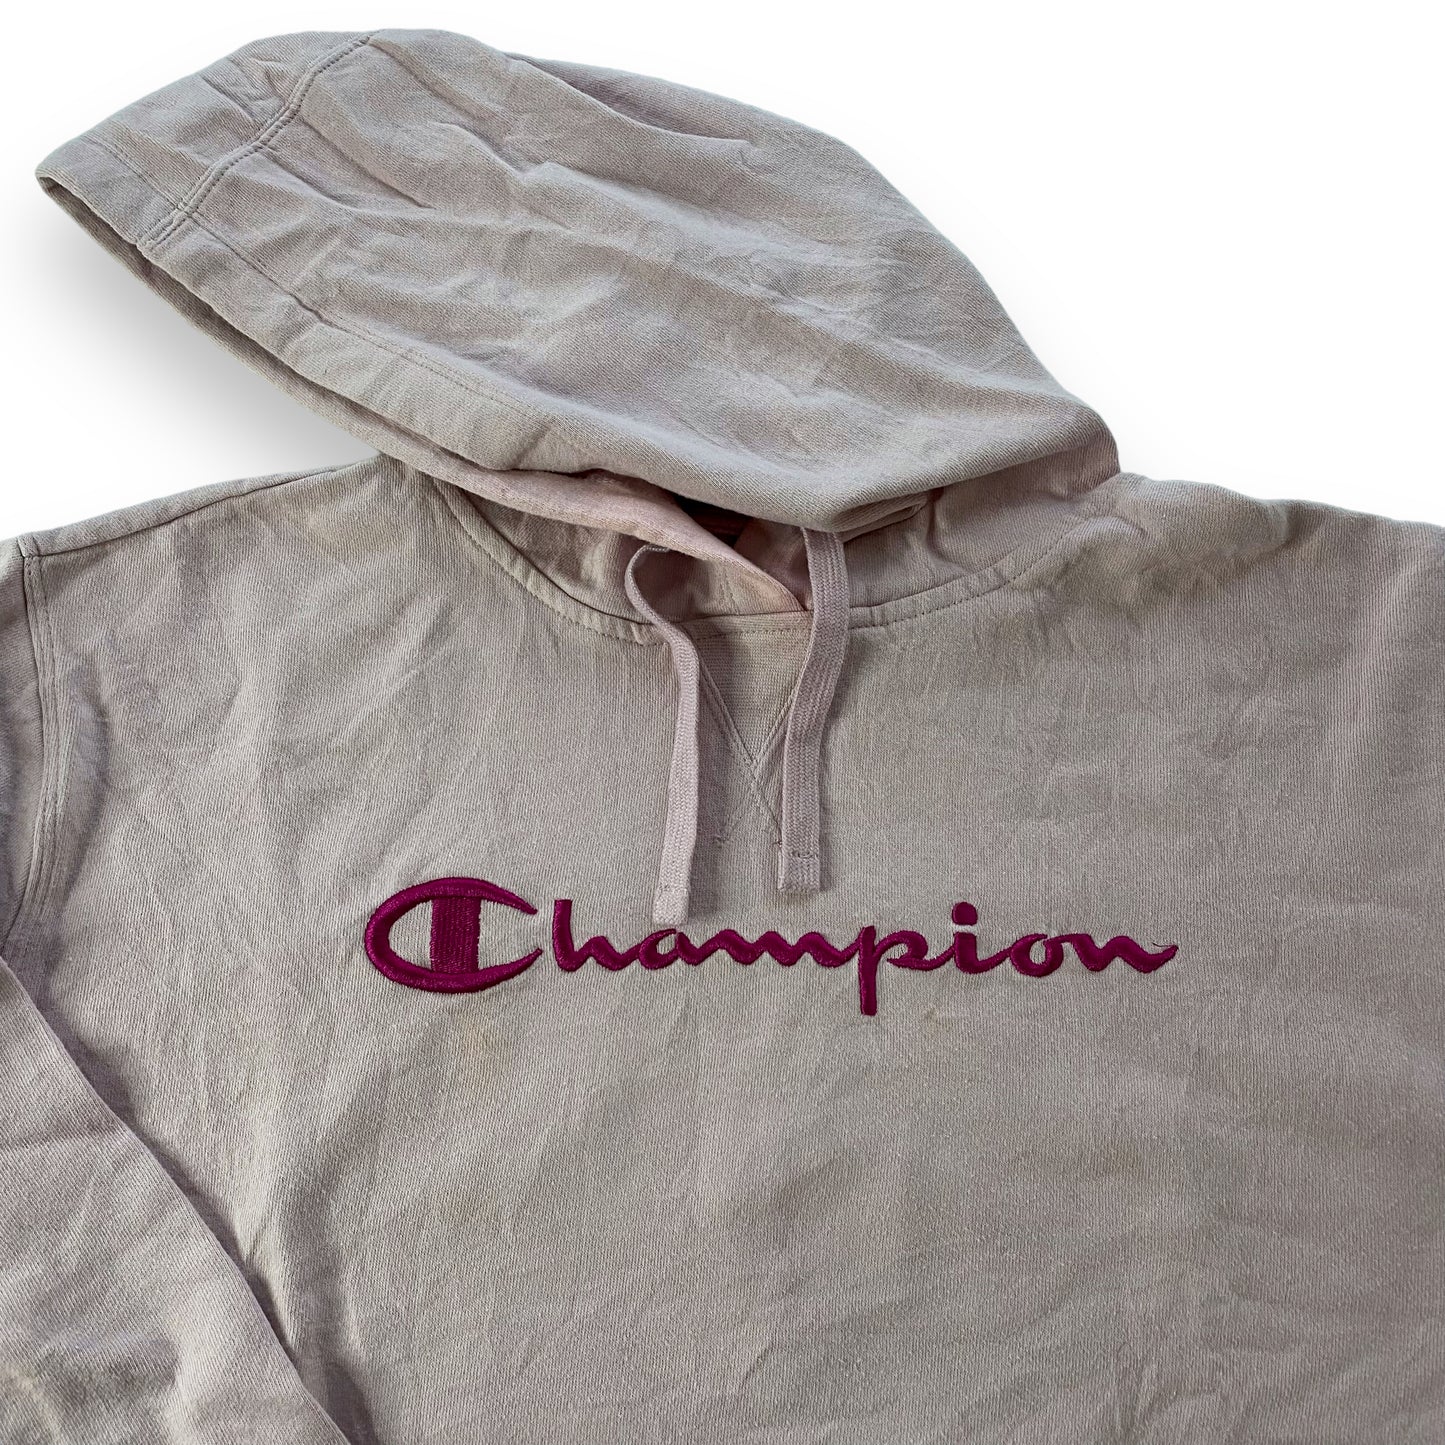 rose hoodie Champion/ Size M